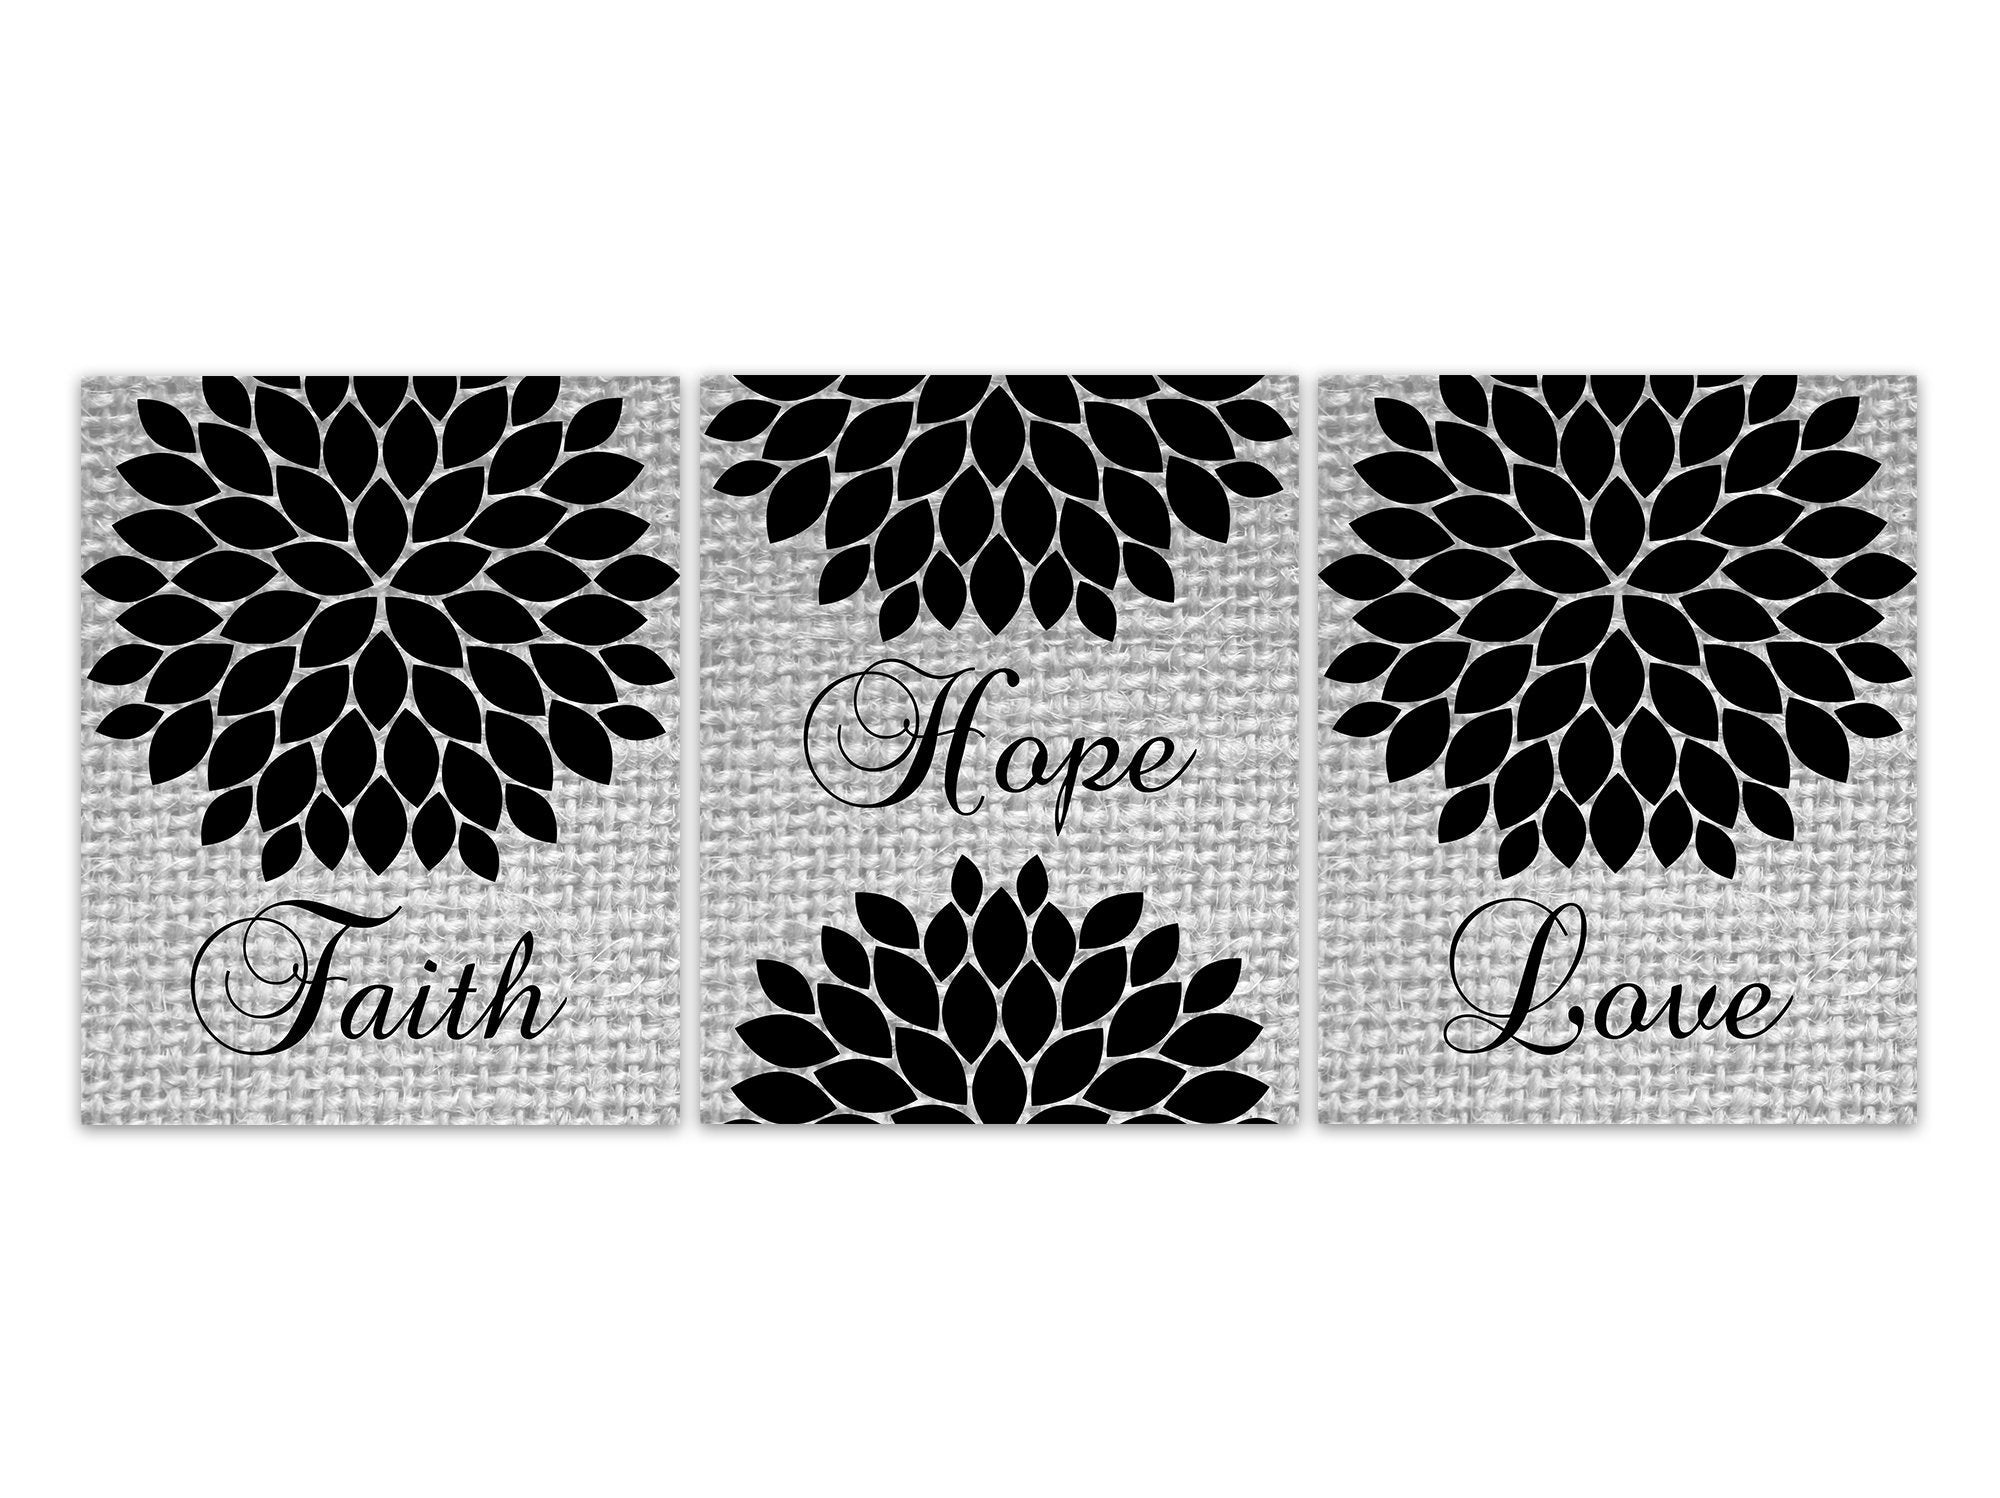 Faith Hope Love Prints, Red Burlap Effect Art, 1 Corinthians 13:13, Christian Home Decor, Religious Wall Art, Black Bedroom Decor - HOME617